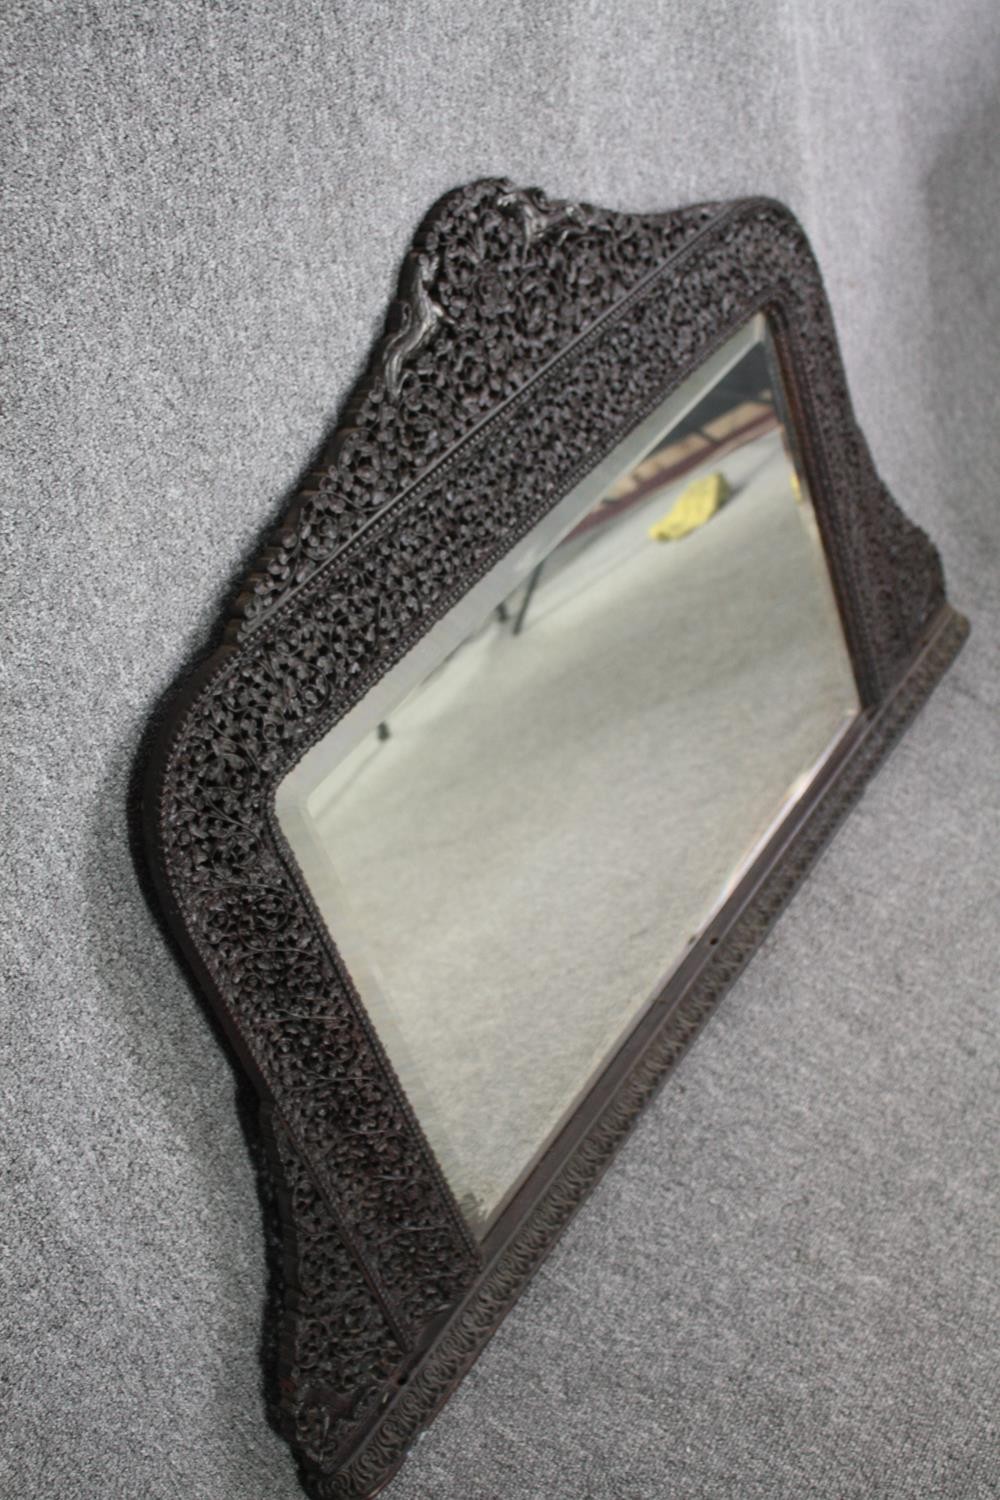 Over mantle carved Burmese hardwood mirror. H.80 W.127cm. - Image 3 of 4